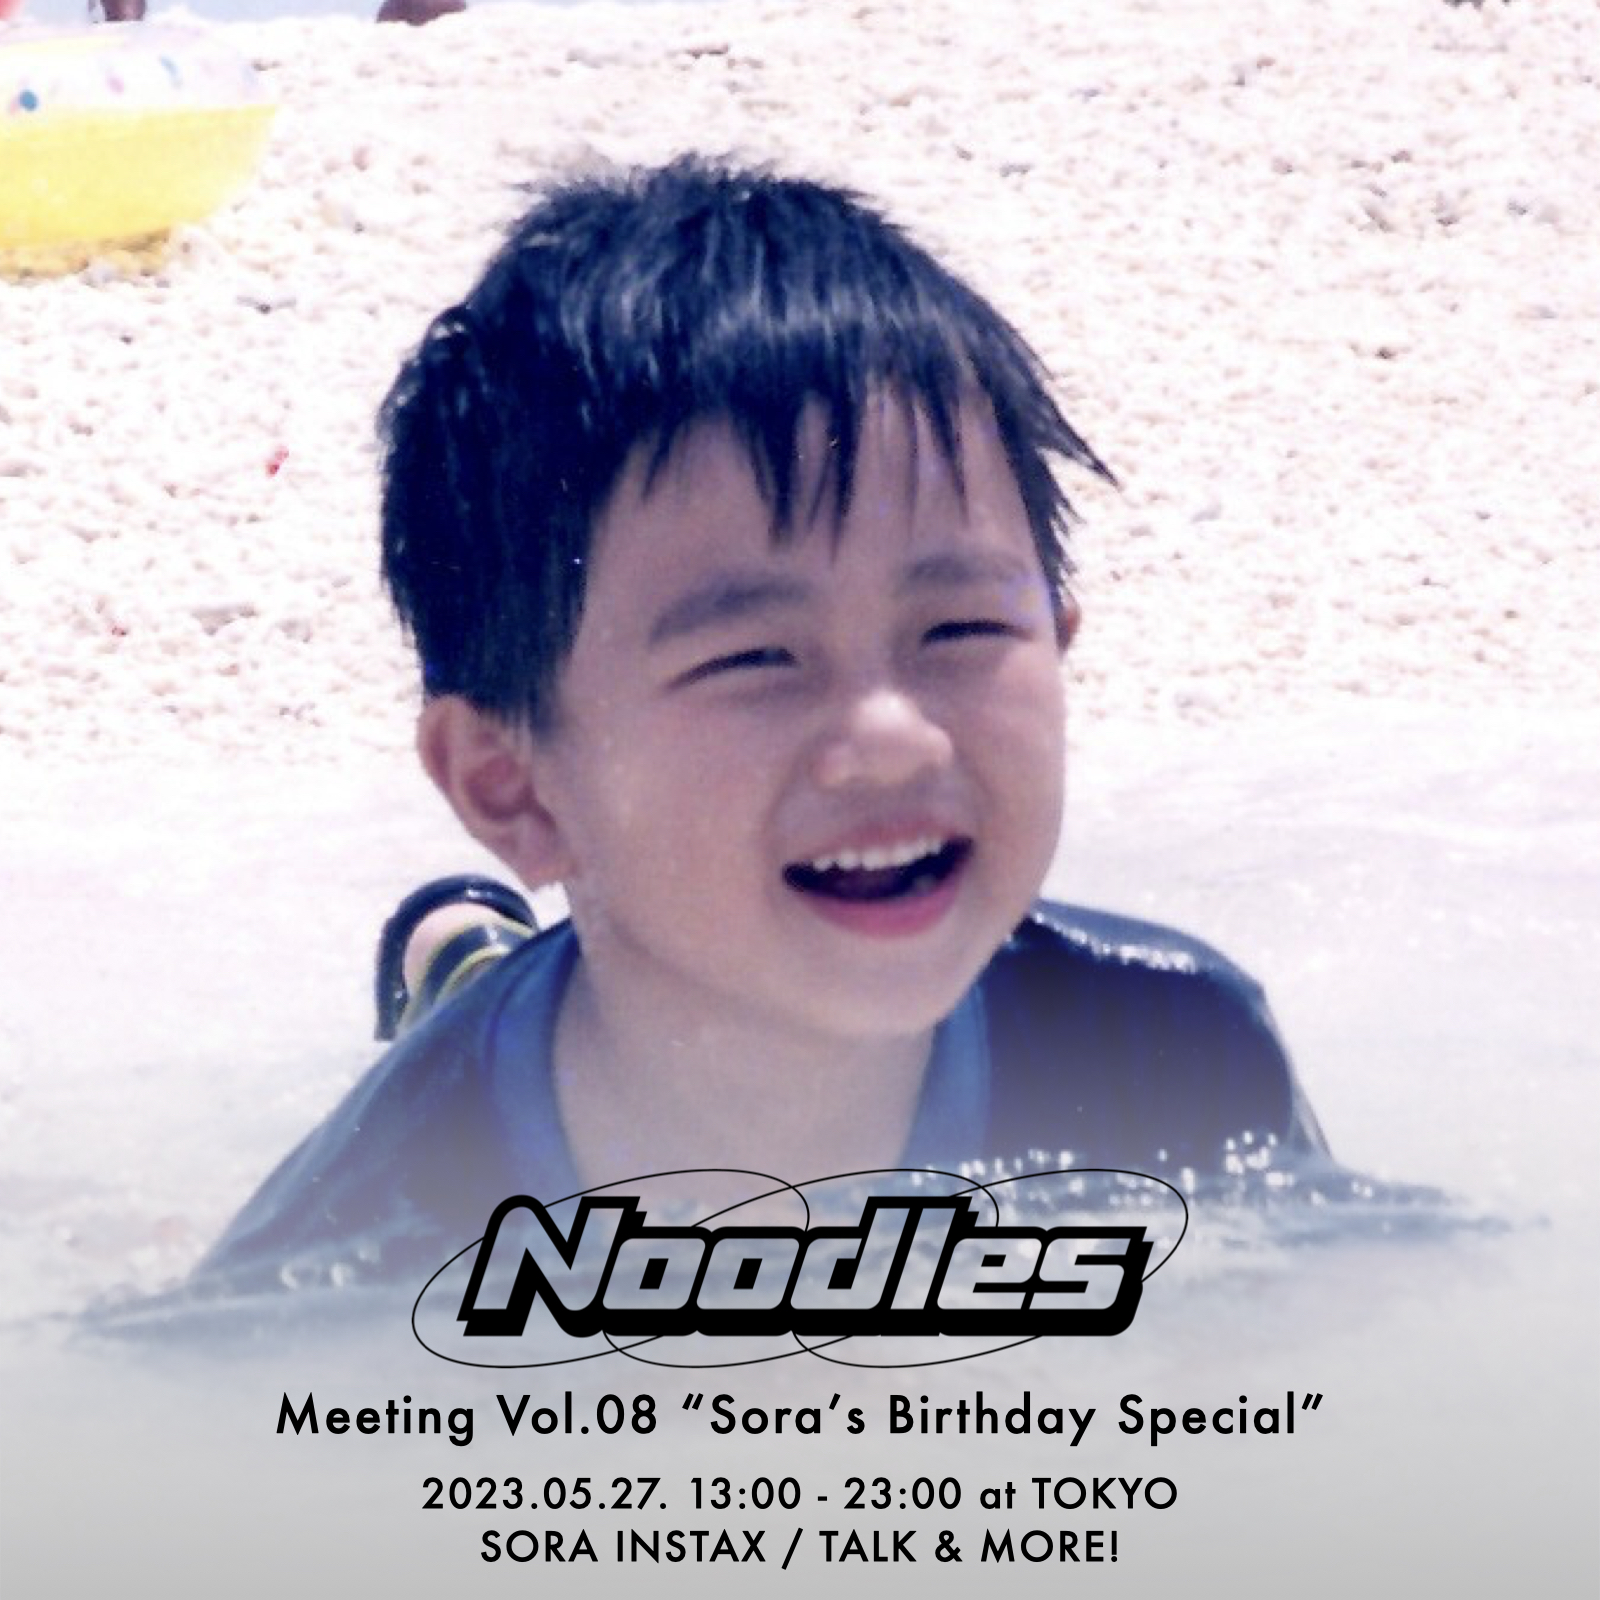 Noodles Meeting Vol.08 “Sora’s Birthday Special”